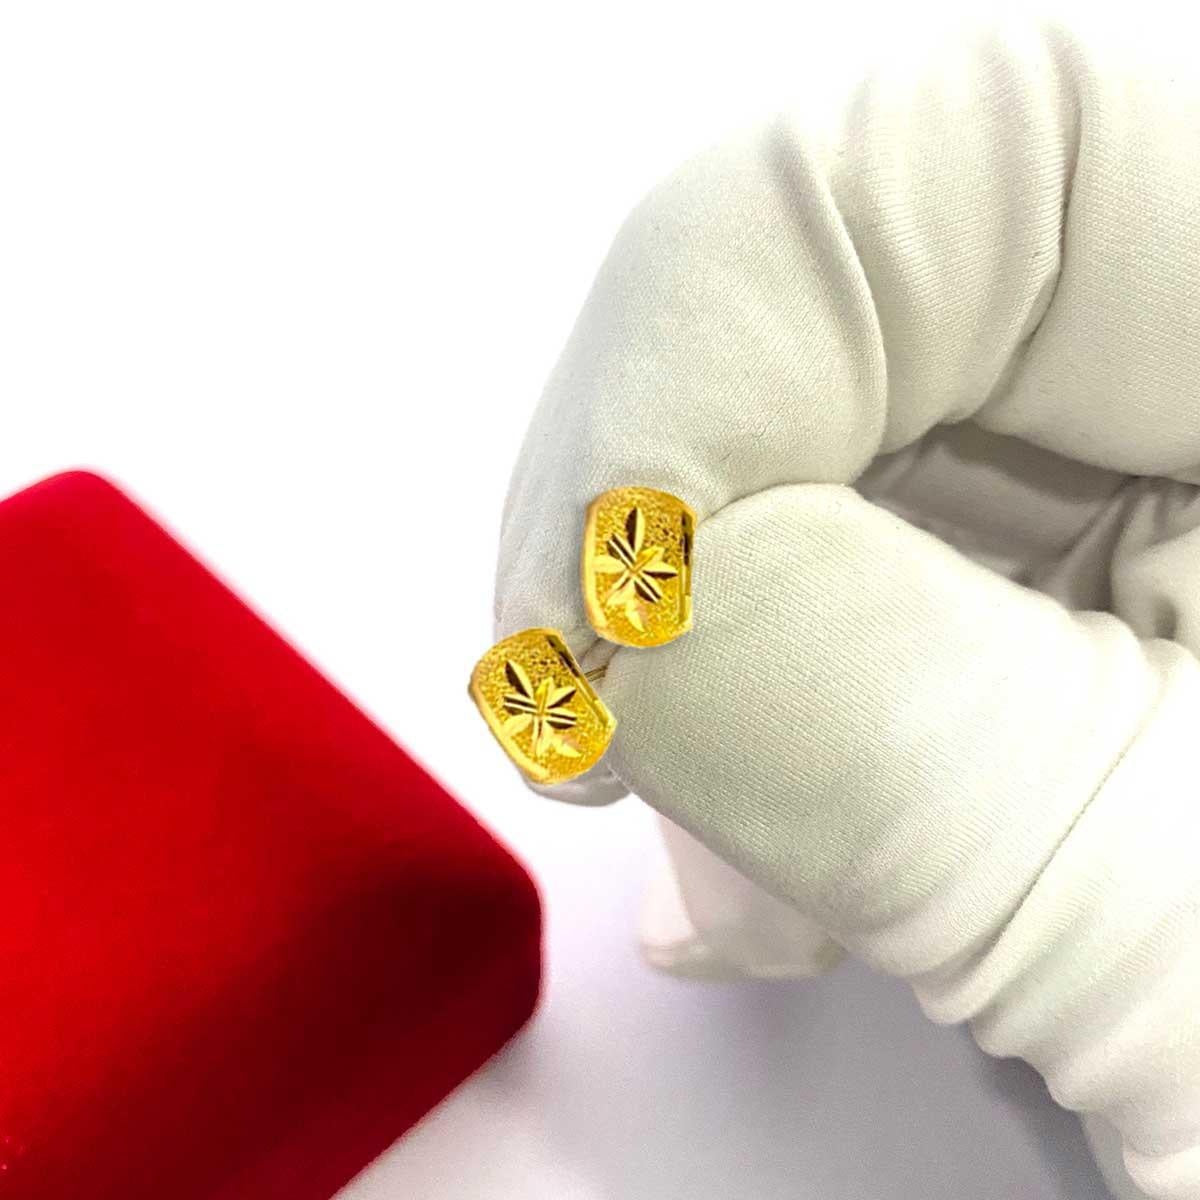 18K Pure Gold Clip Design Screw Stud Earrings